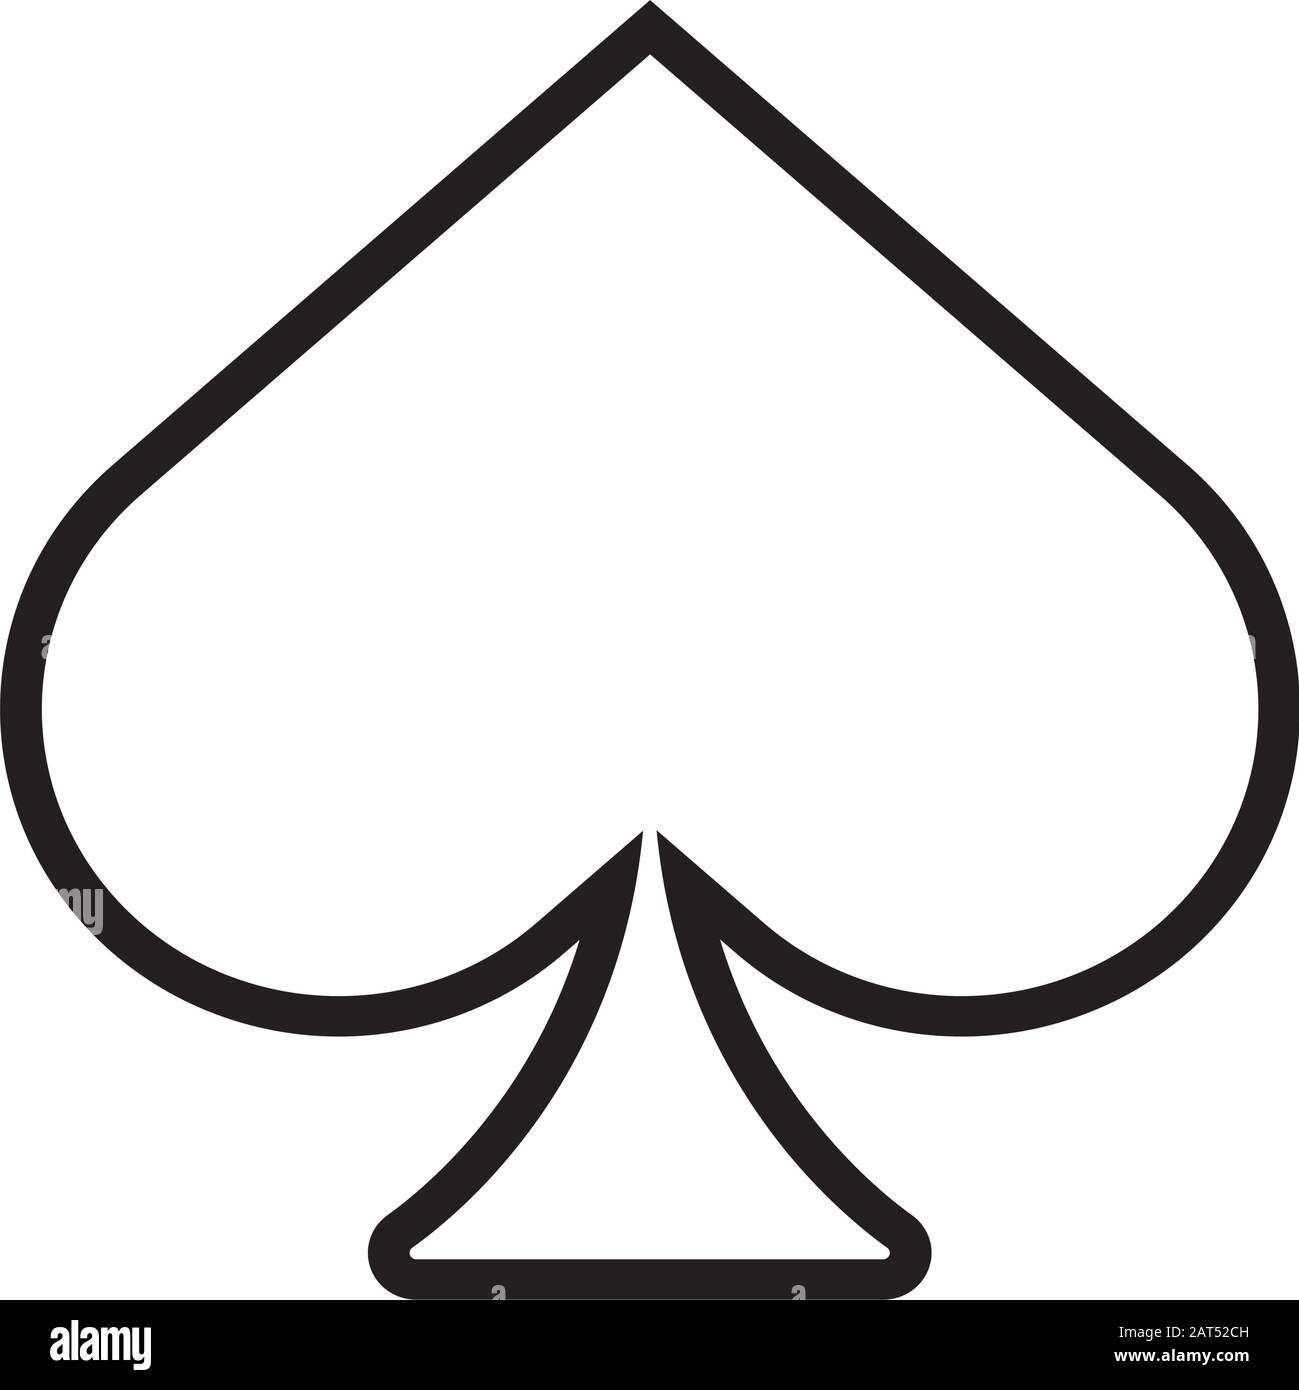 casino poker spade figure icon Stock Vector